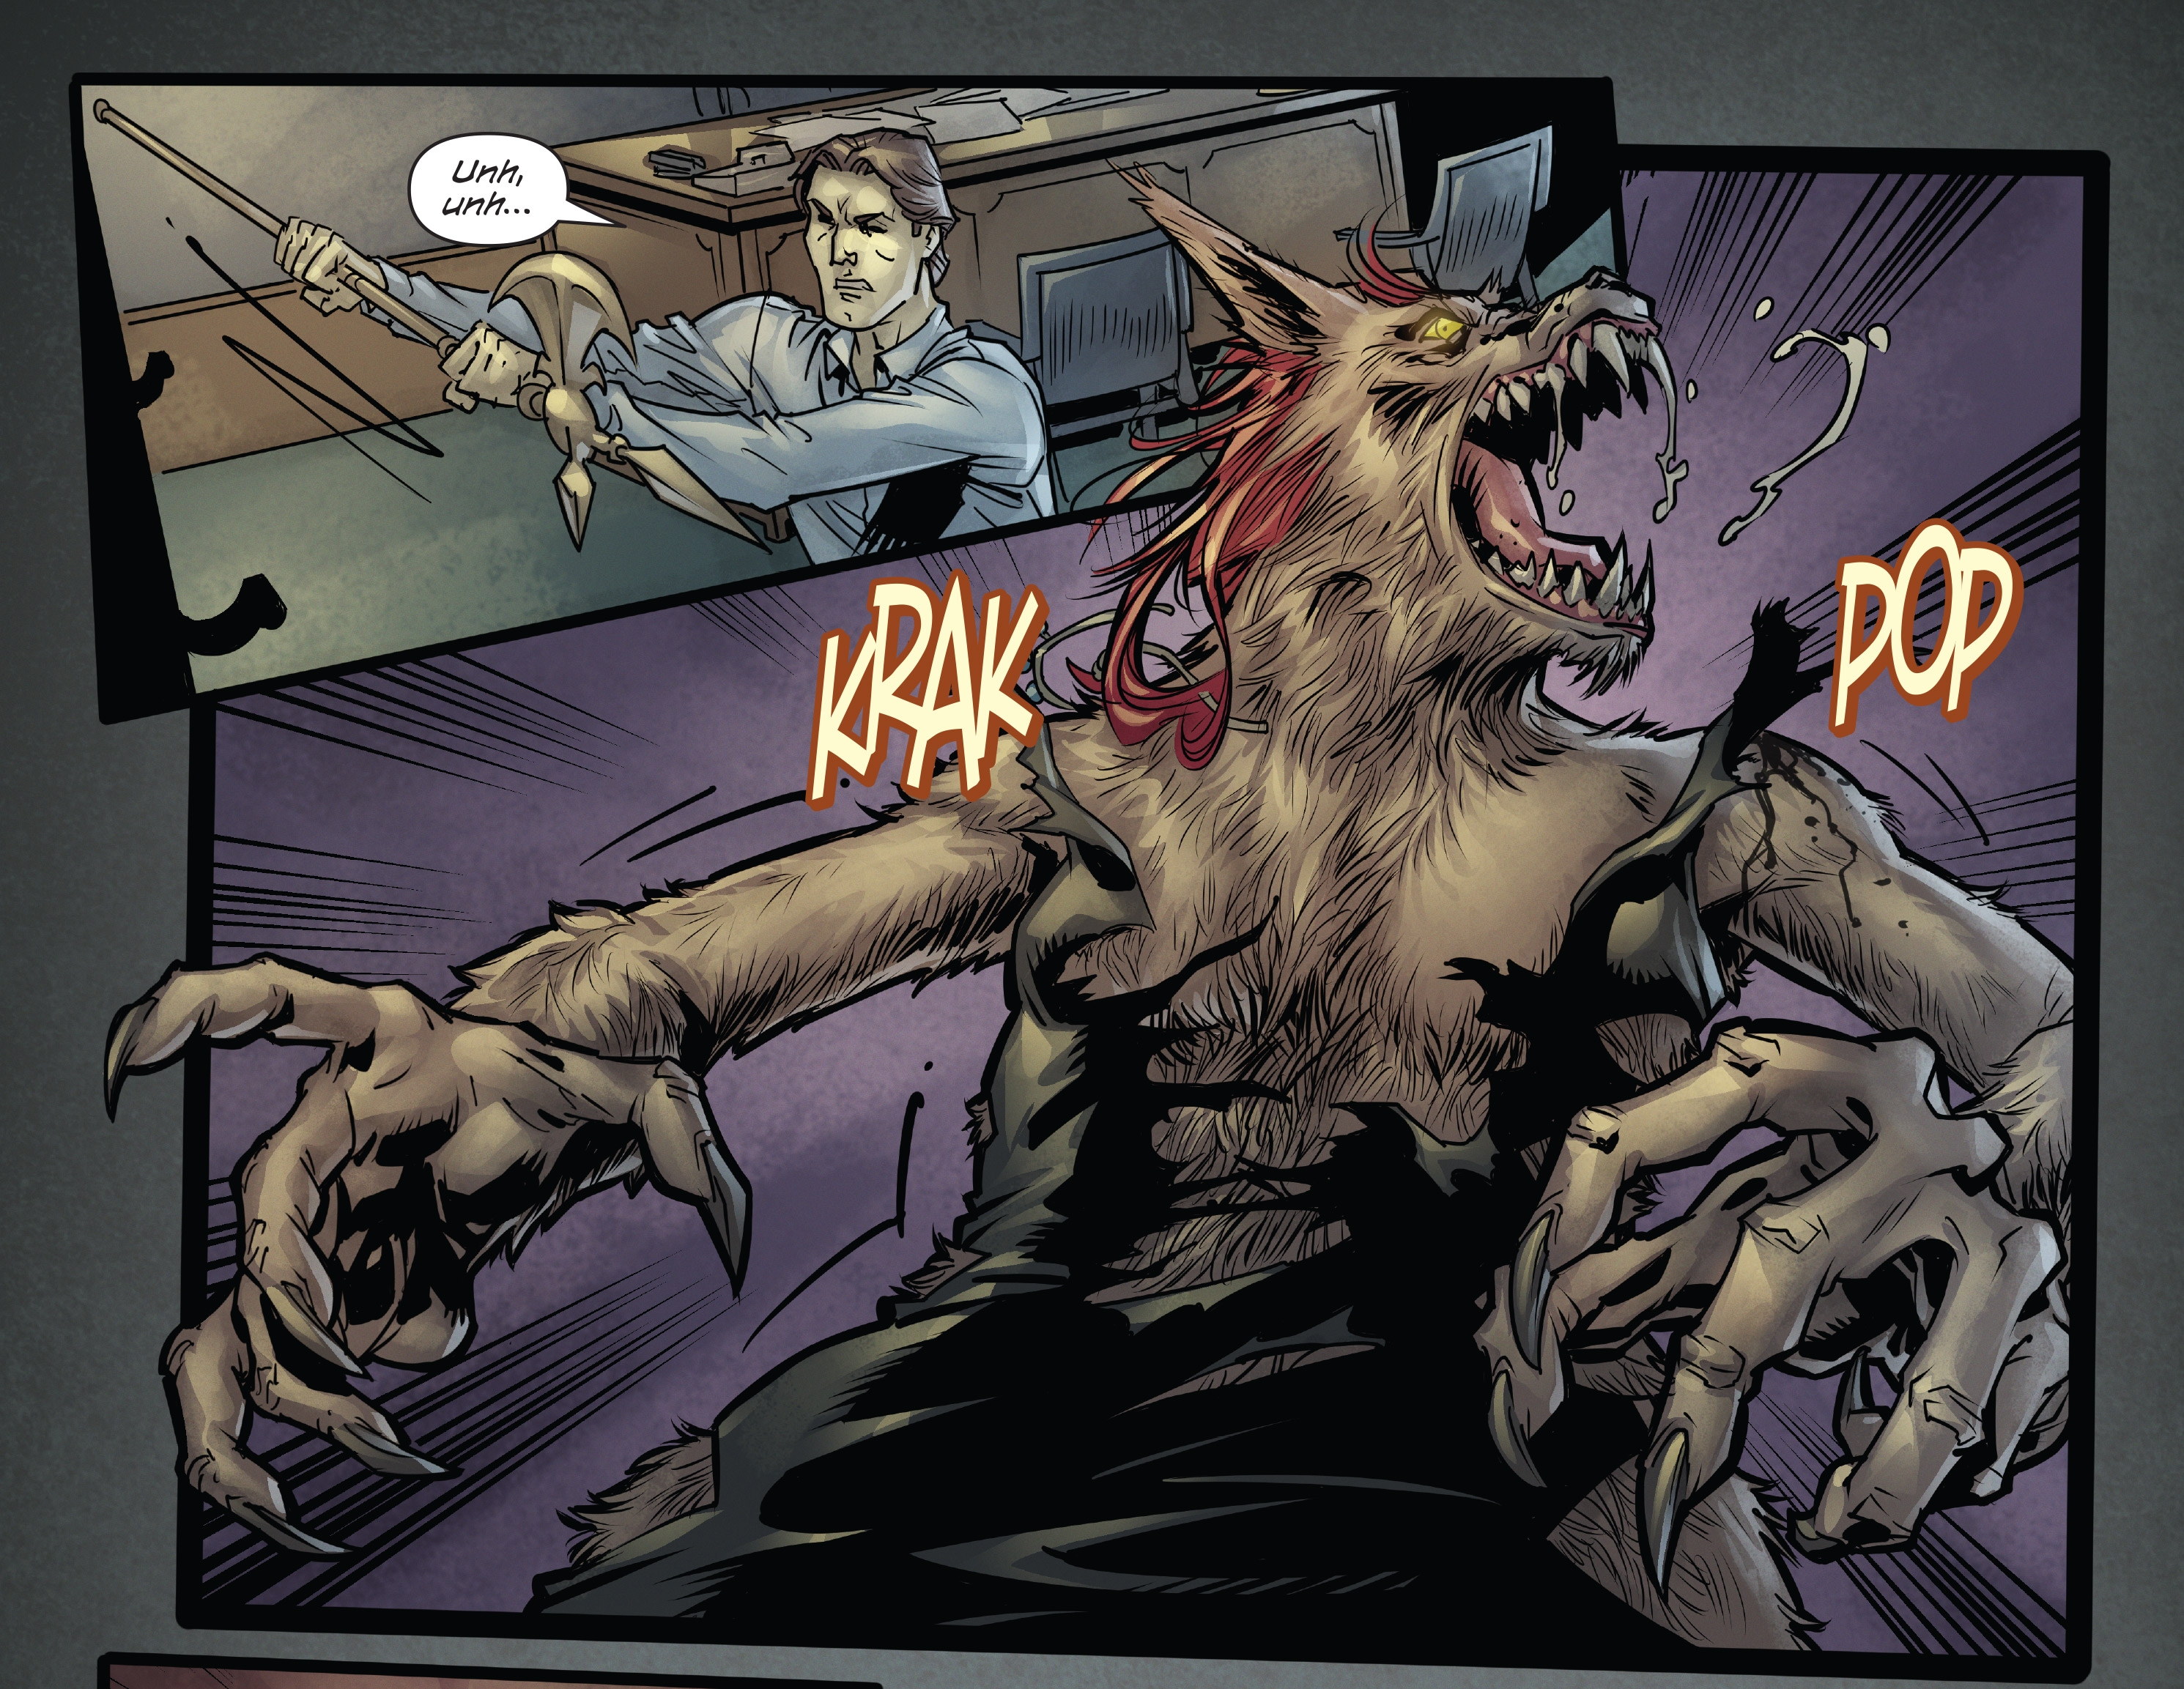 Adopting a werewolf комикс. Комикс про оборотня the Howling.